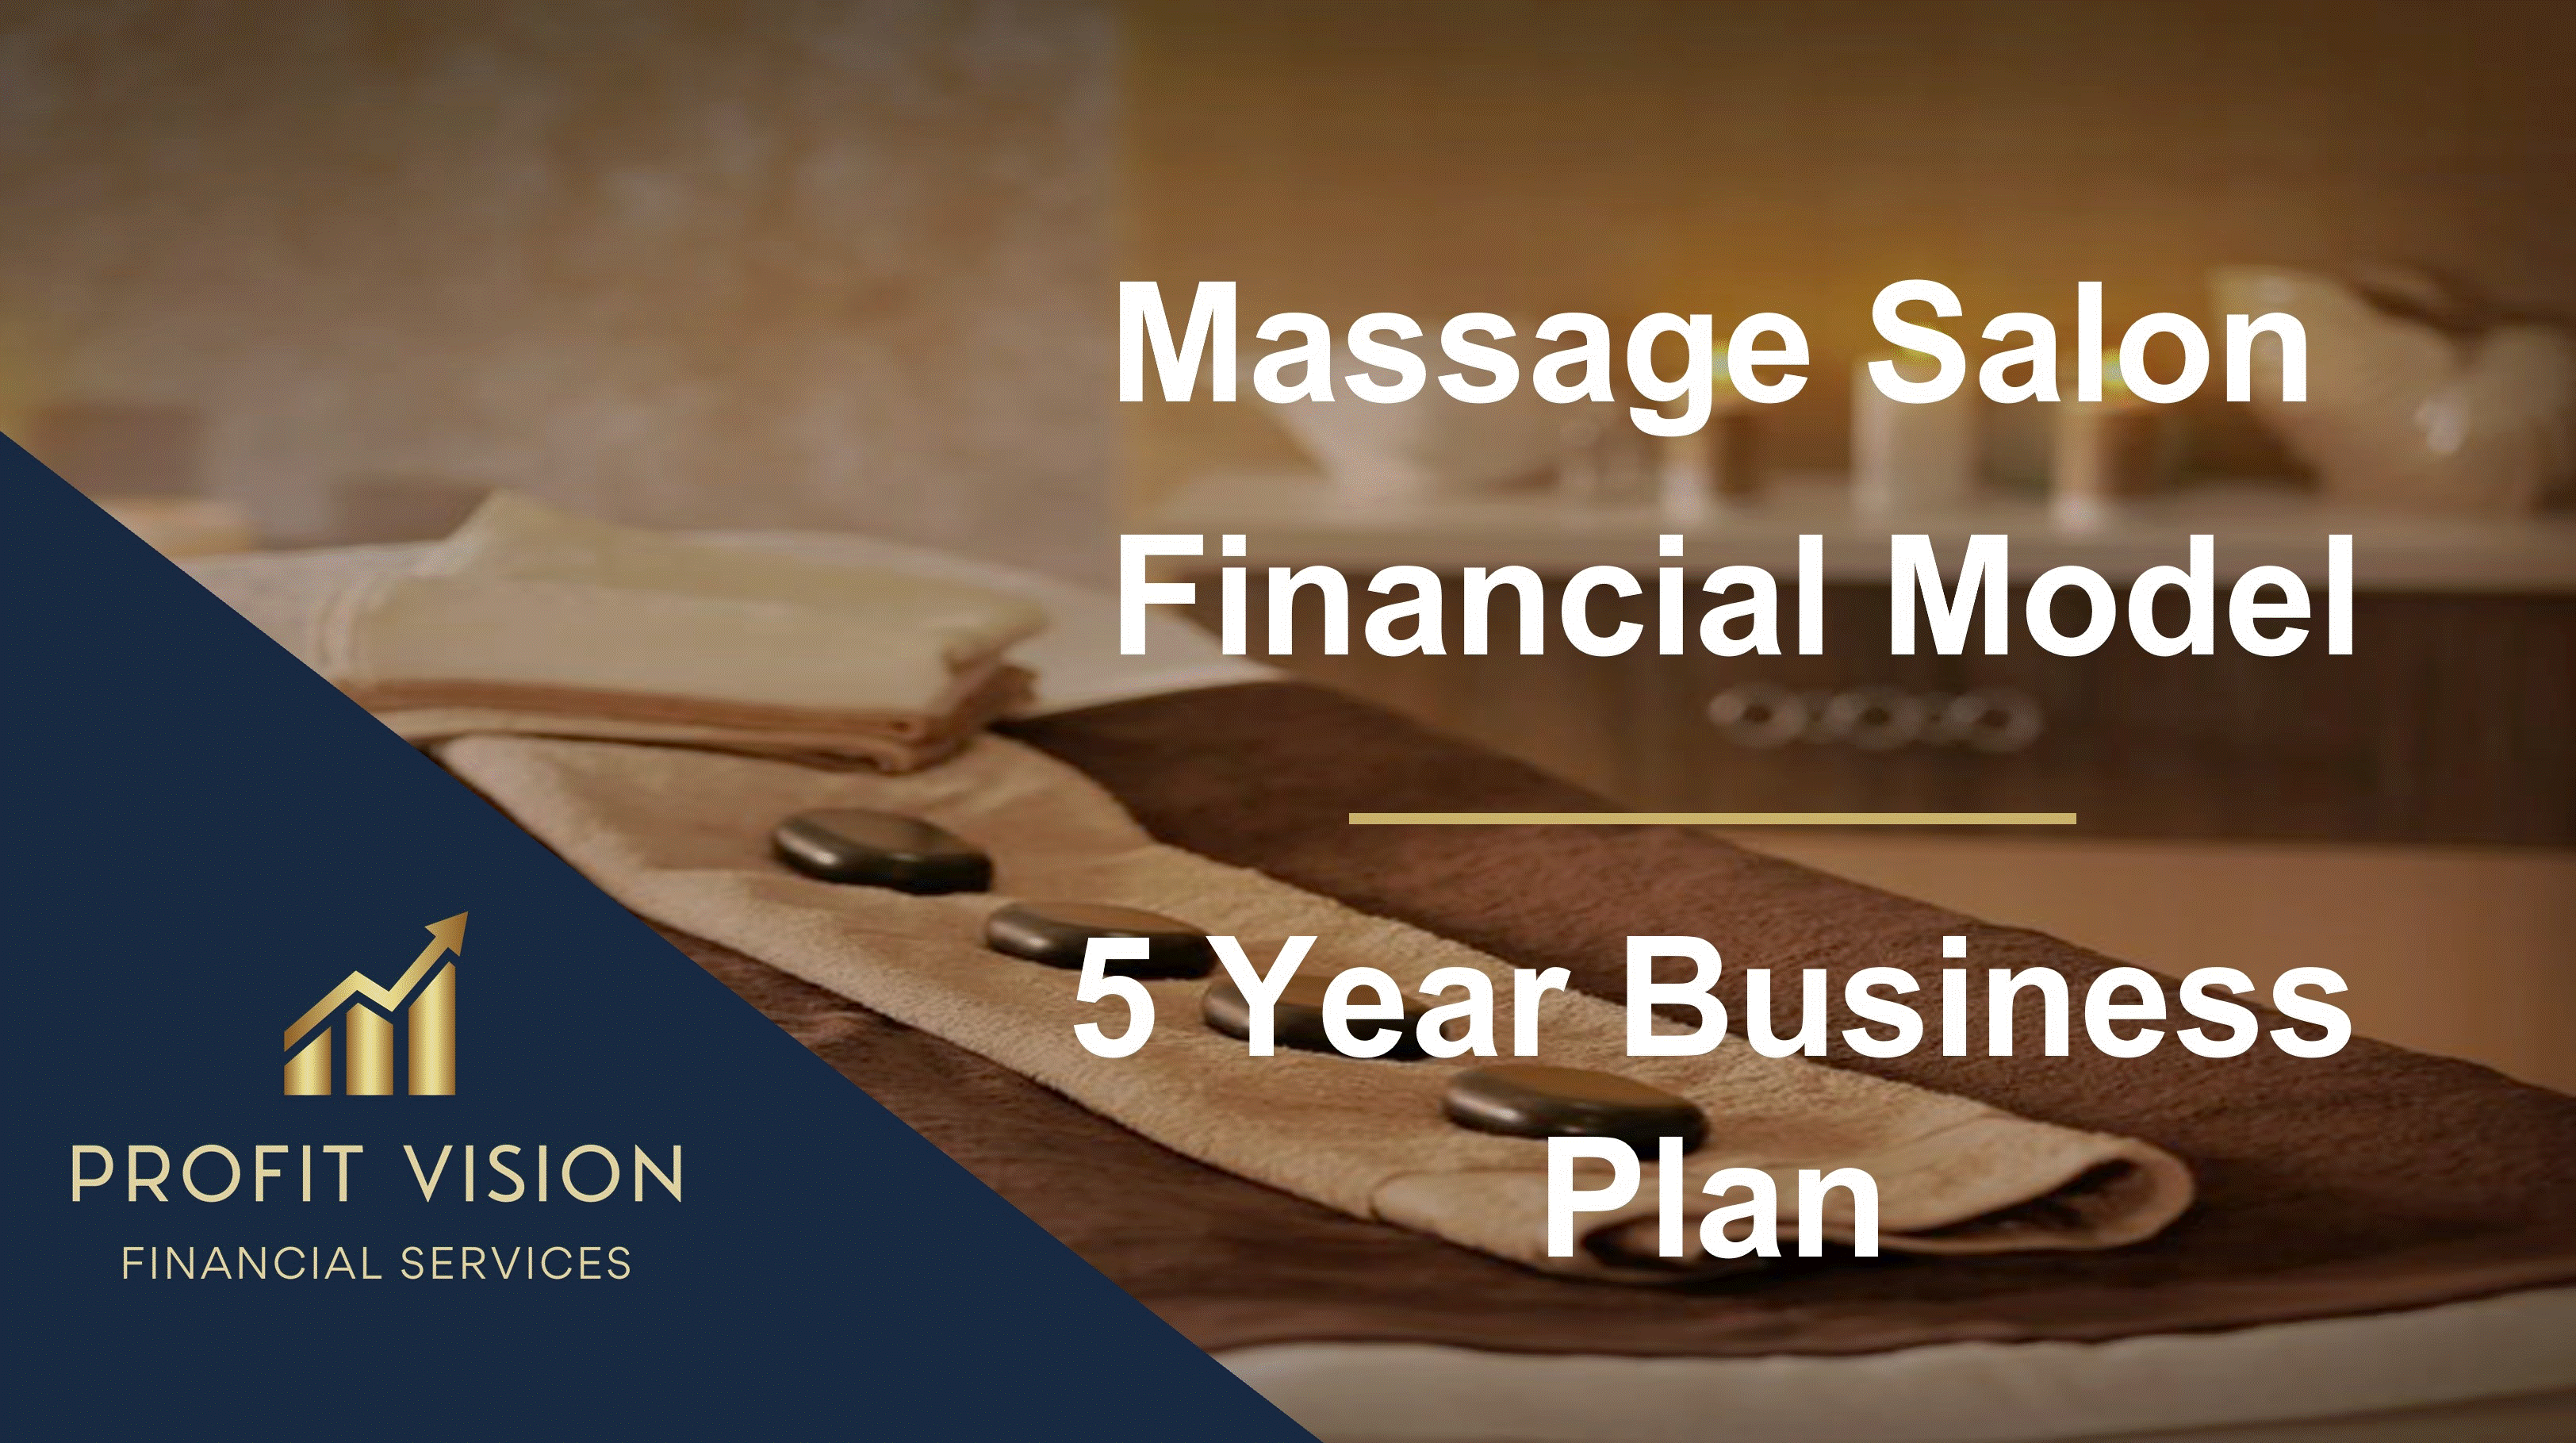 Massage Salon Financial Model - 5 Year Business Plan